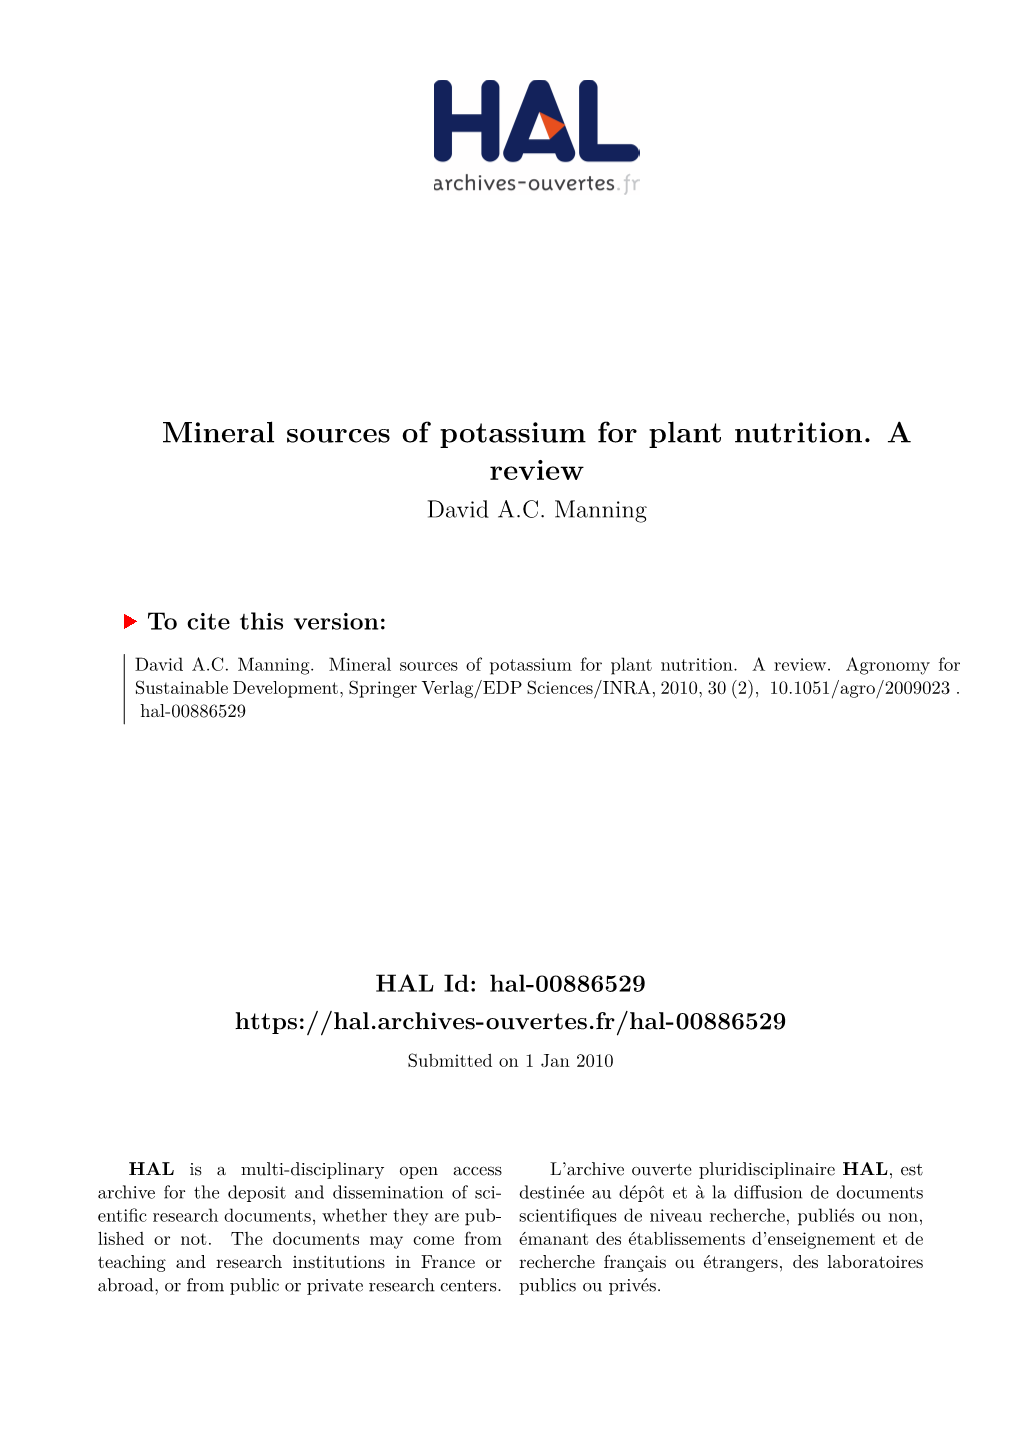 Mineral Sources of Potassium for Plant Nutrition. a Review David A.C